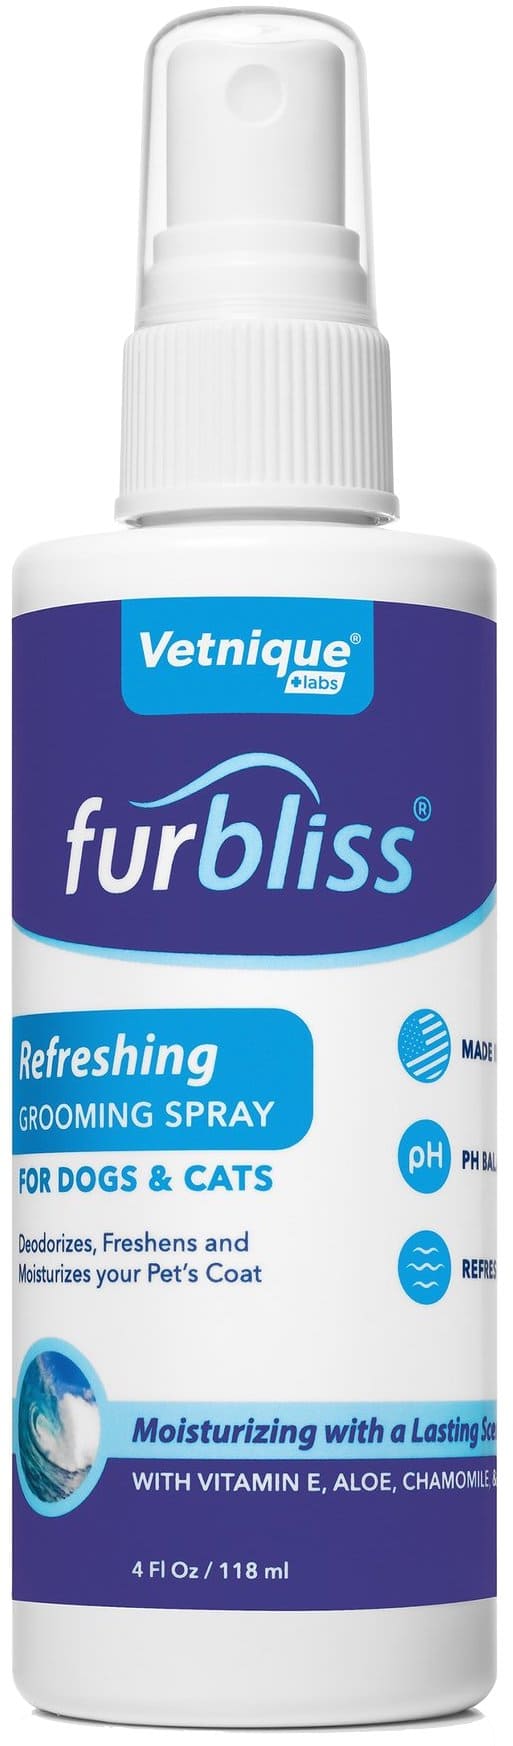 Furbliss Refreshing Grooming Spray